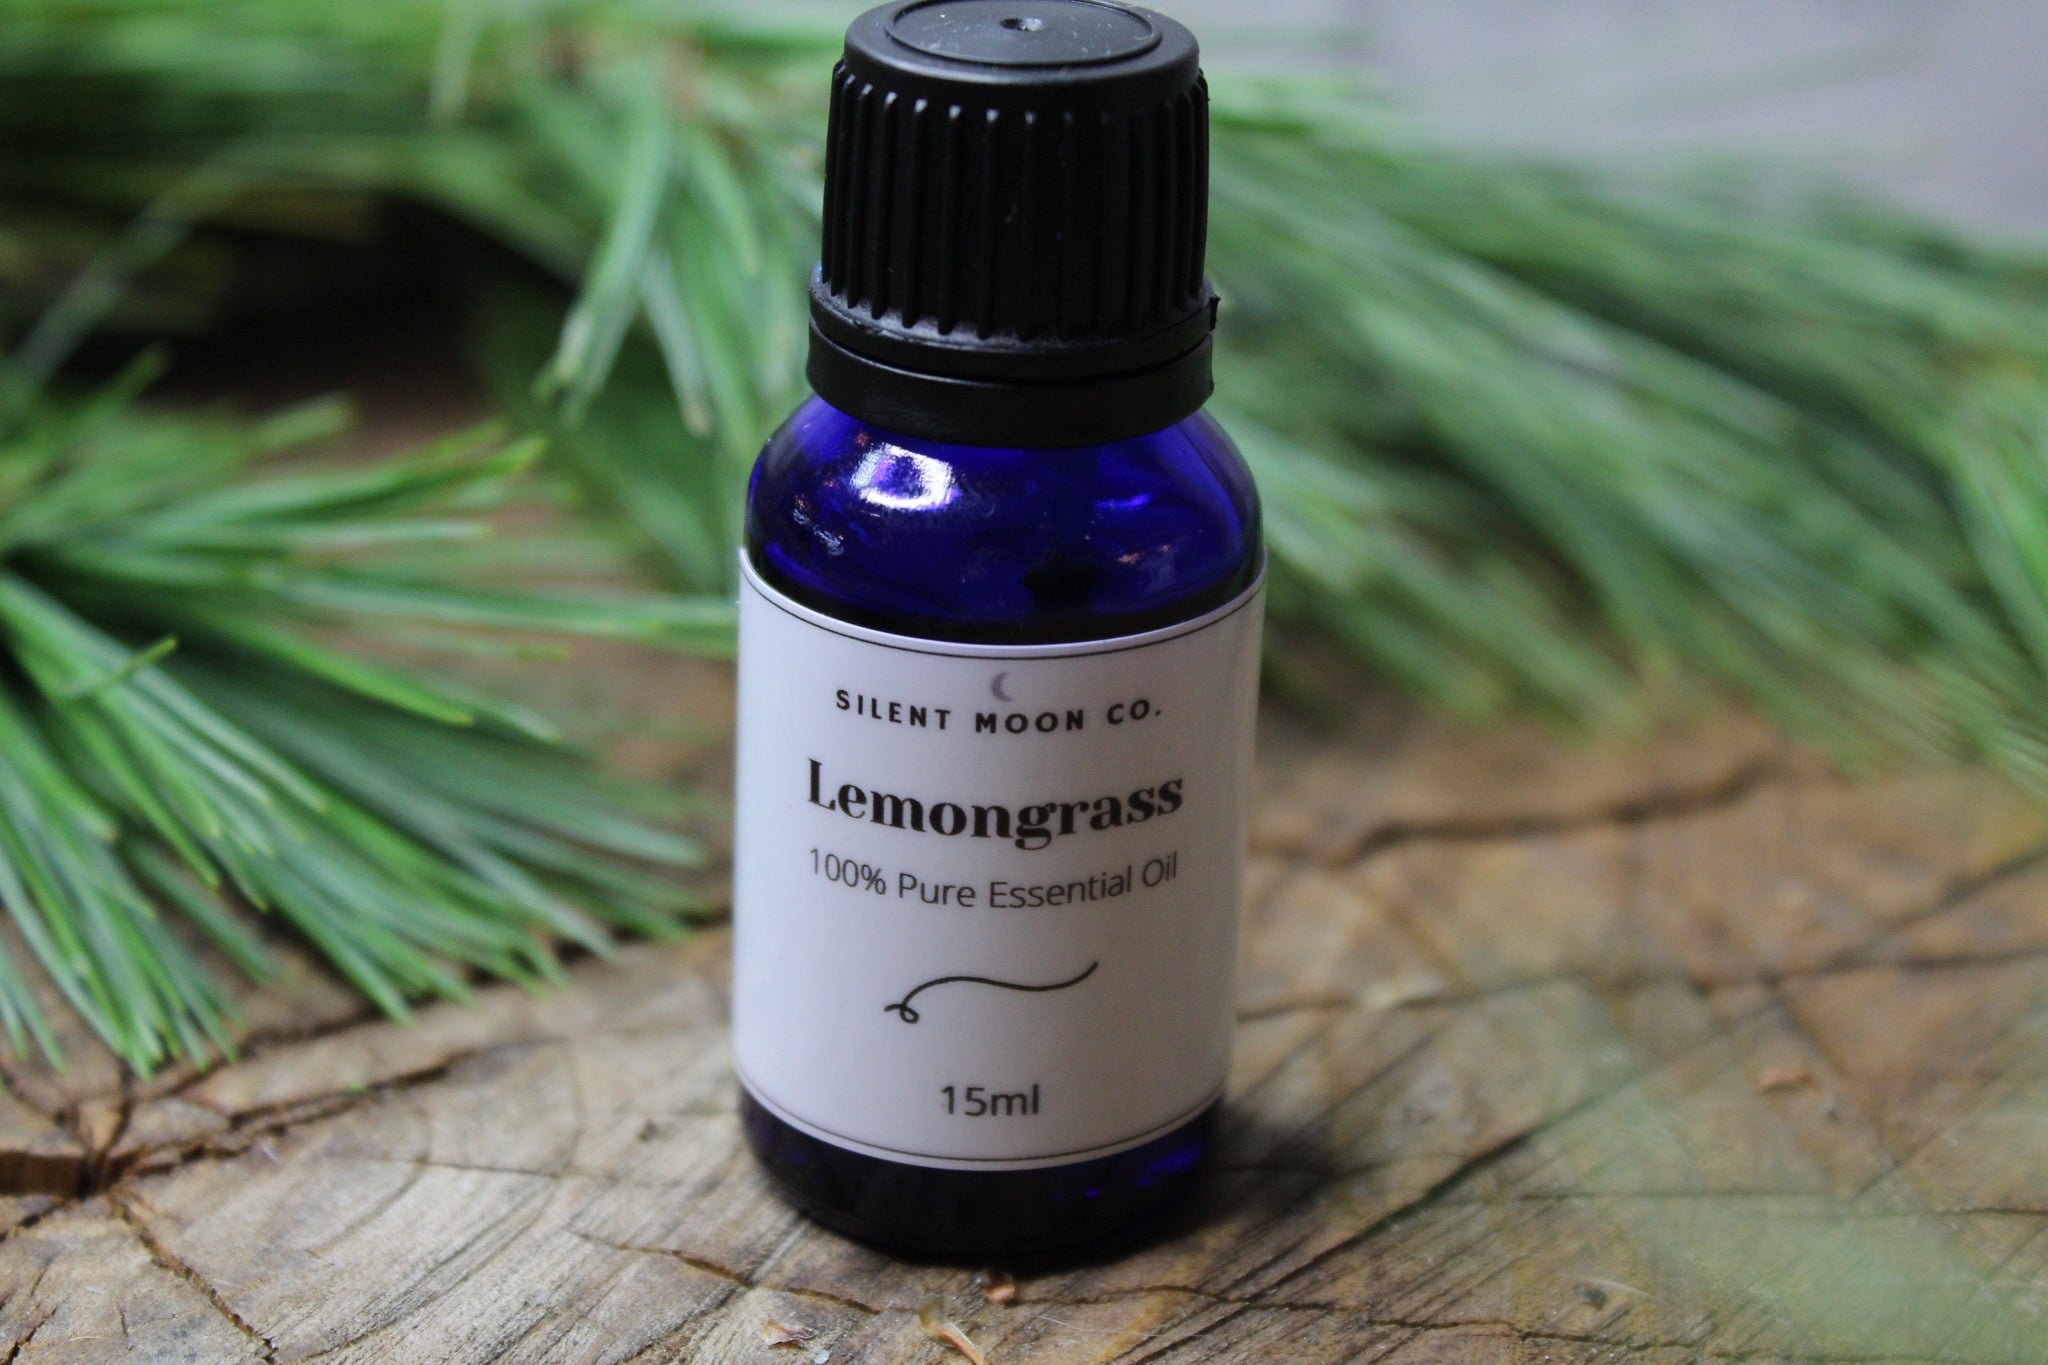 Silent Moon Co. - Lemongrass 100% Pure Essential Oil